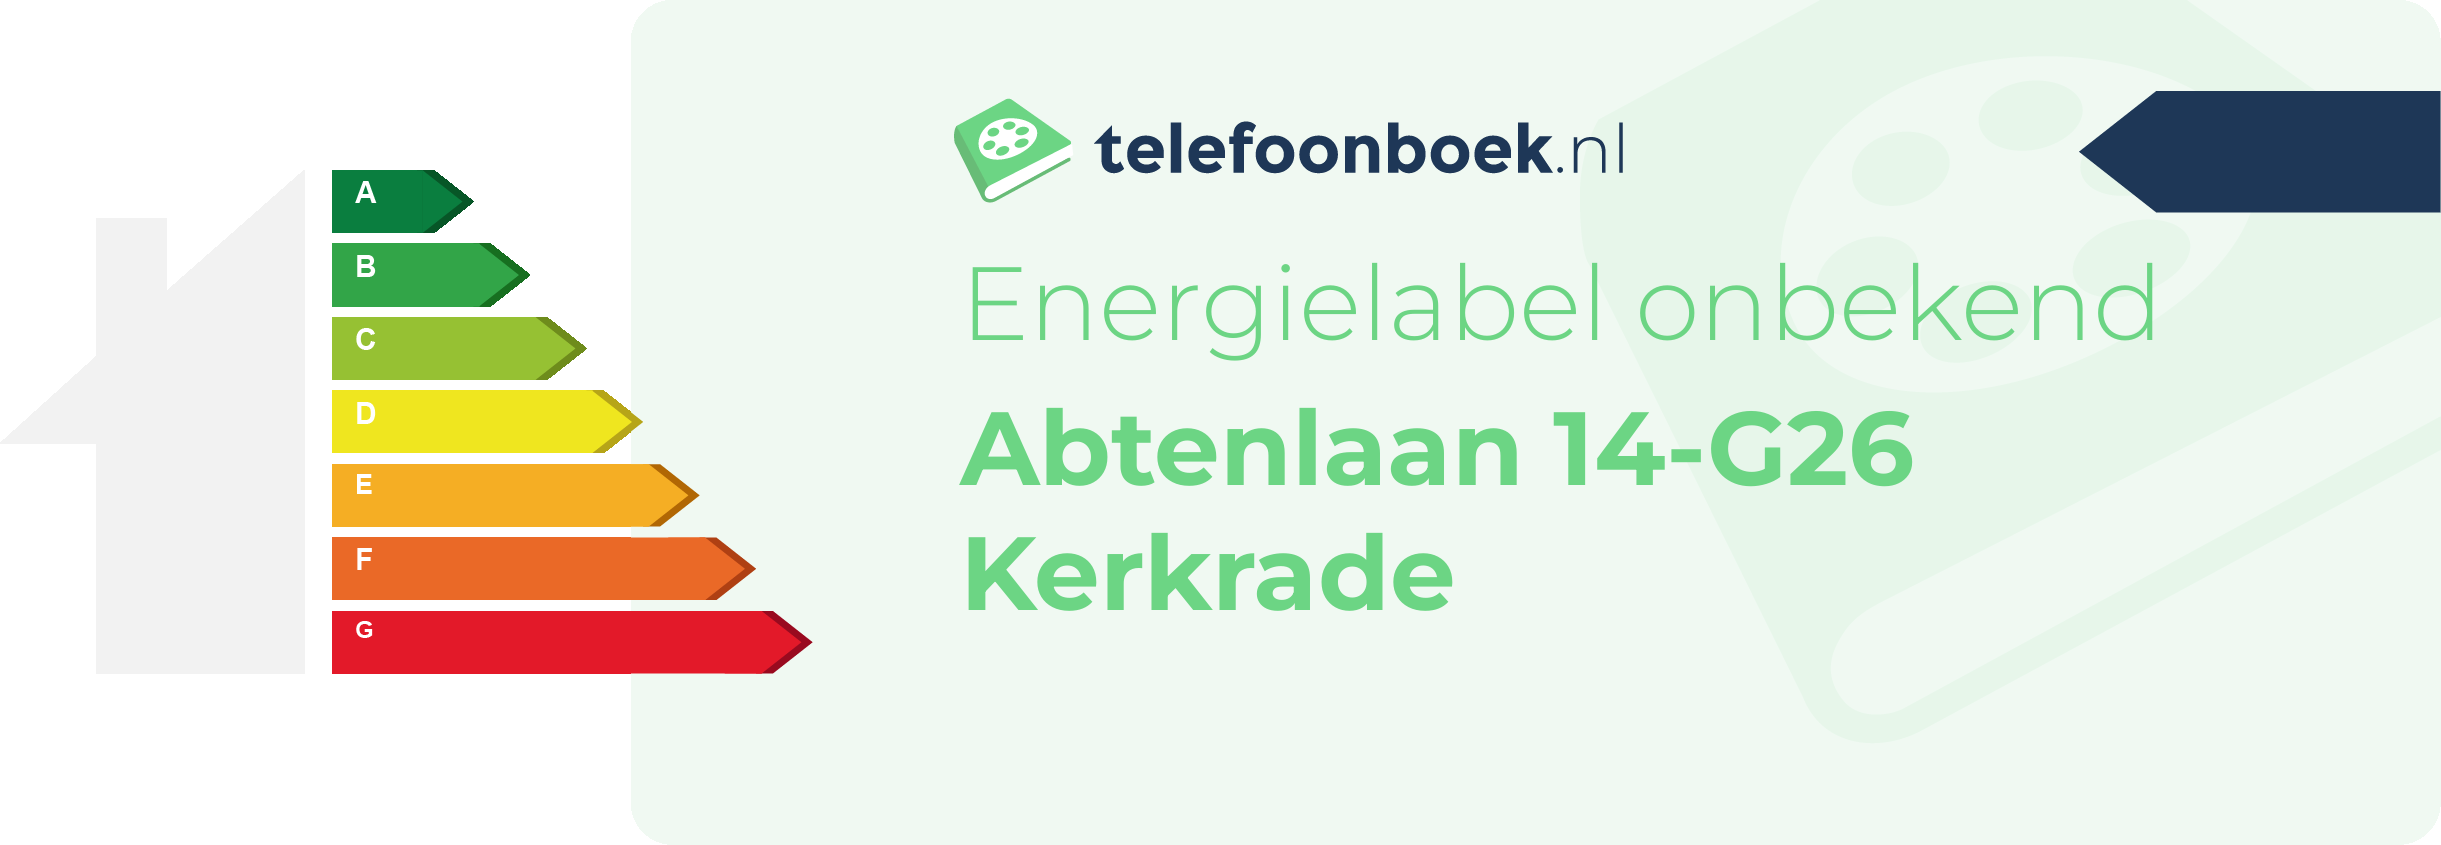 Energielabel Abtenlaan 14-G26 Kerkrade